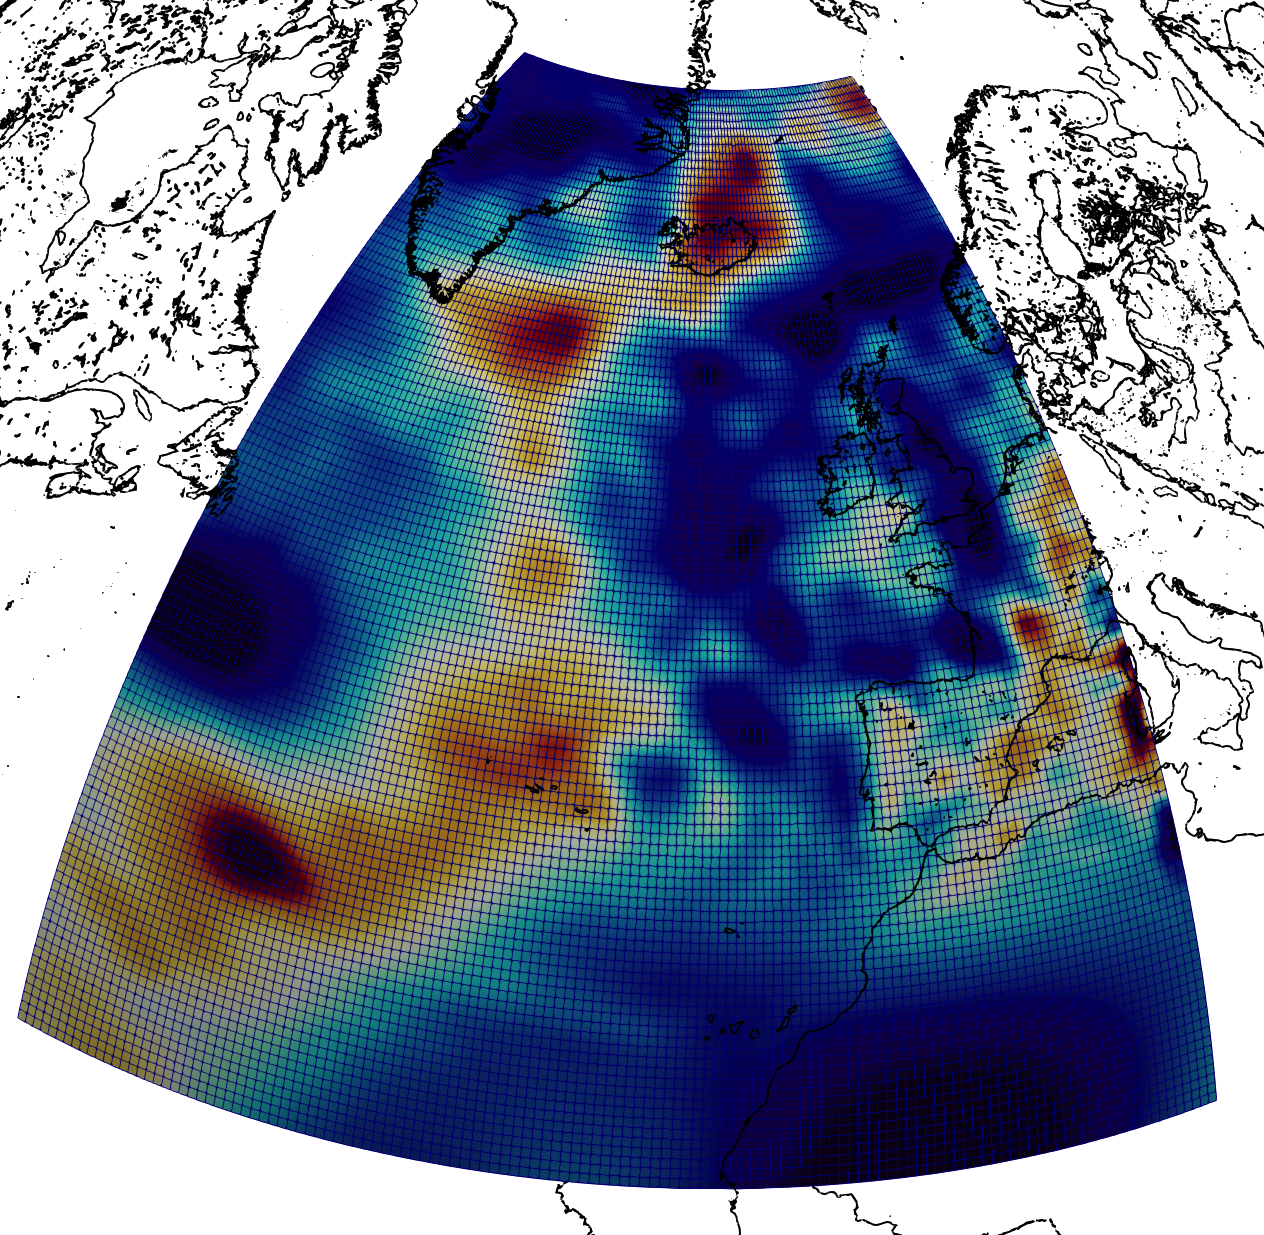 SV velocity in CSEM at 100 km depth beneath the North Atlantic